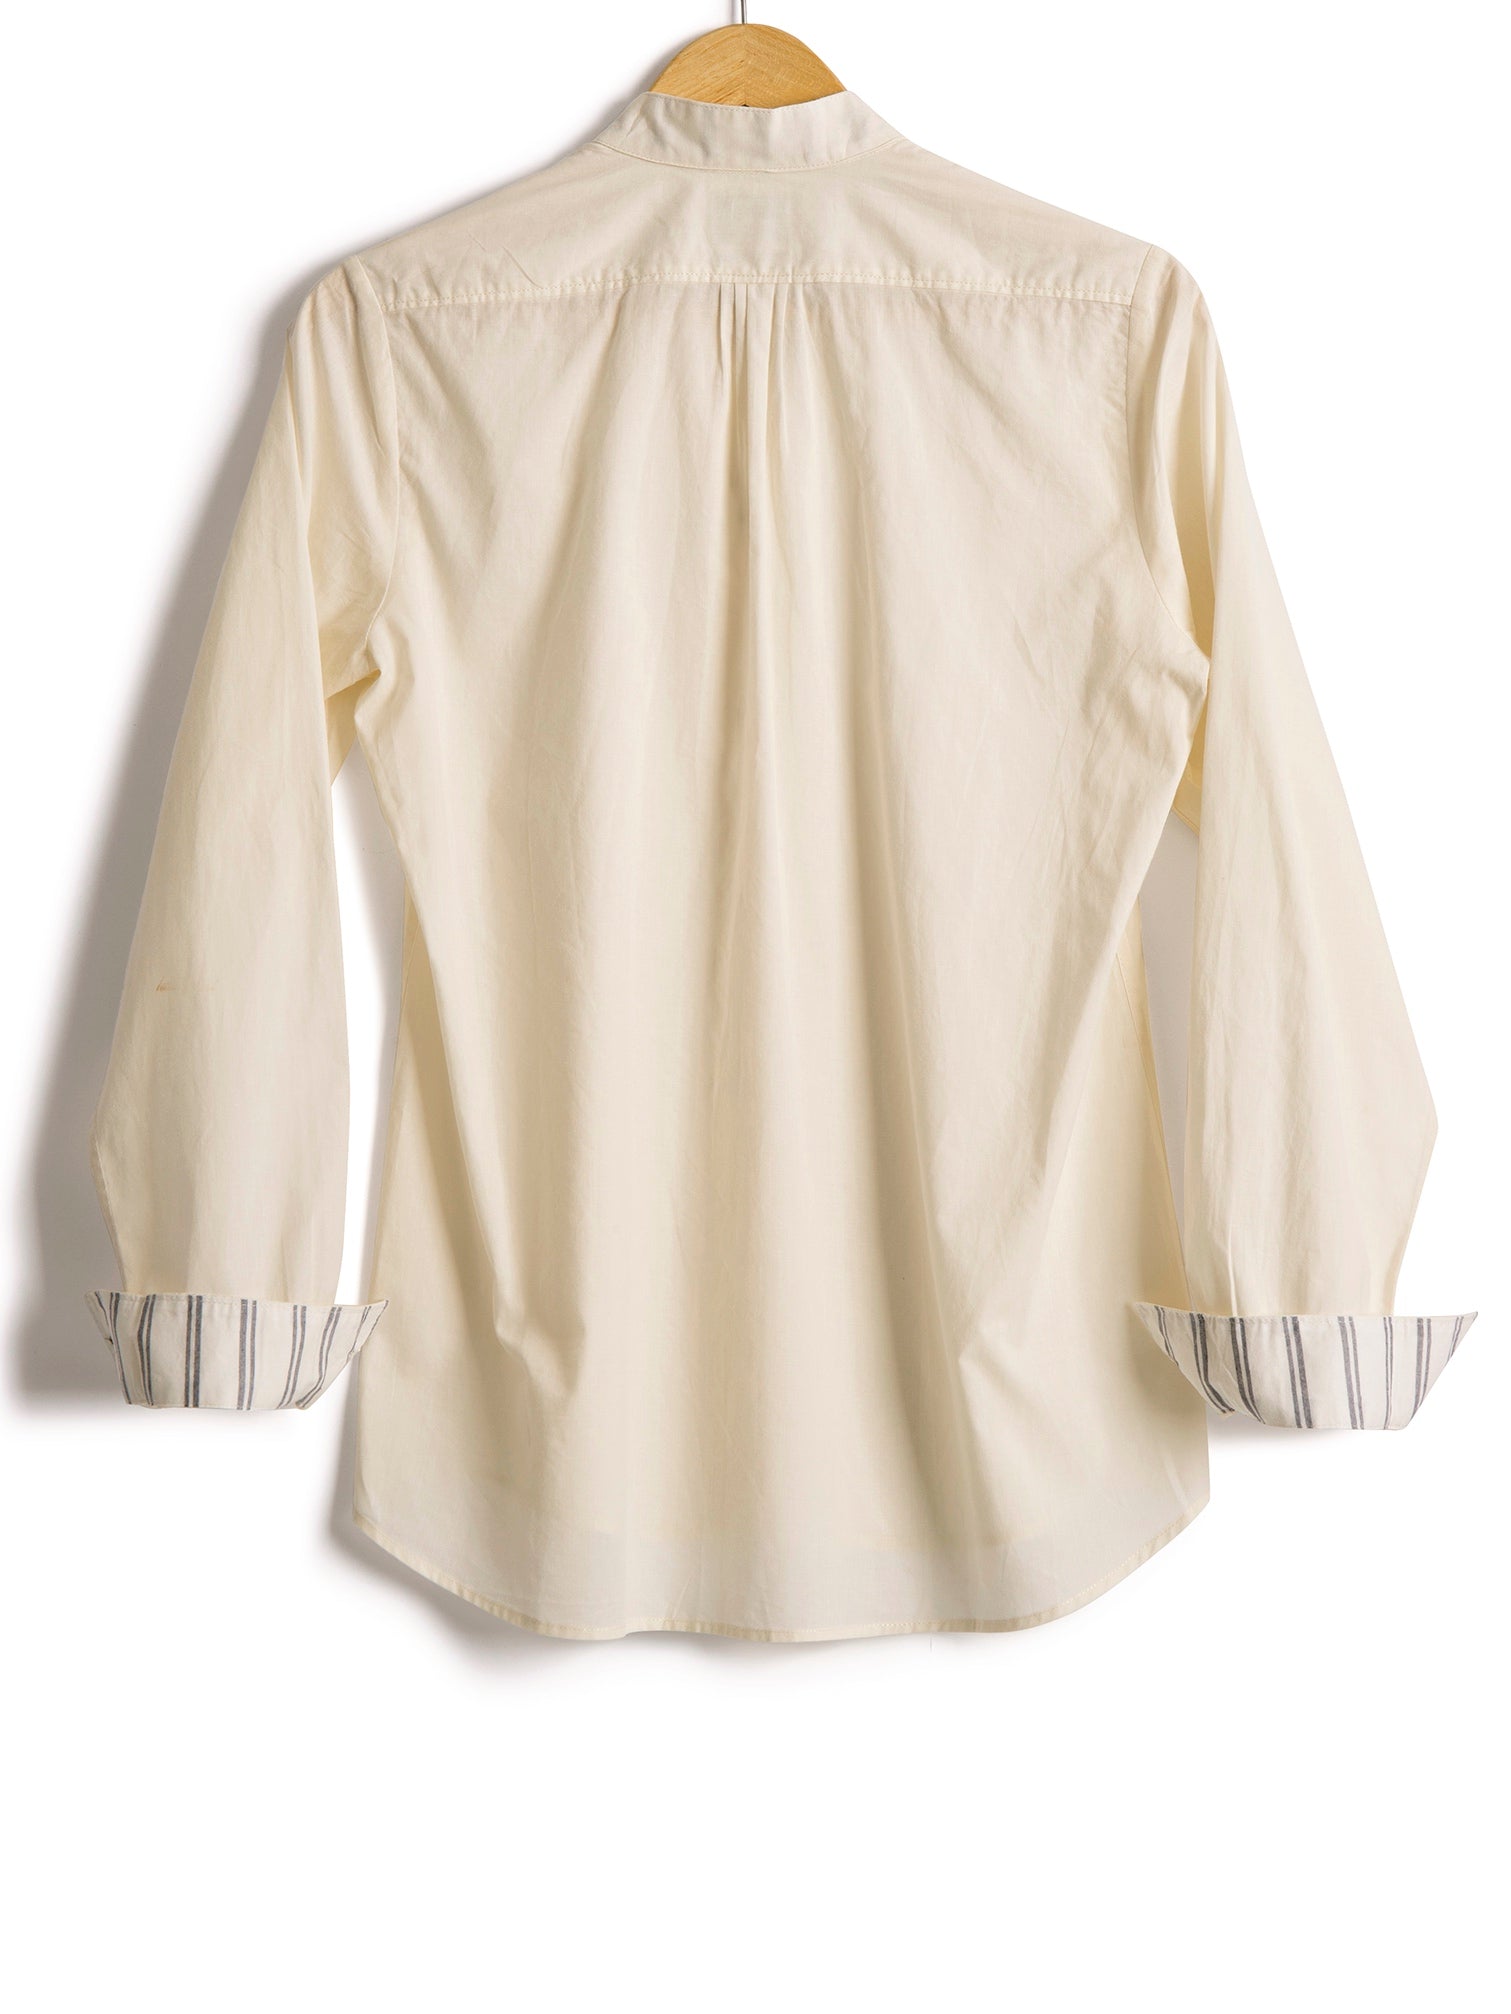 Grandad Shirt in Ivory Cotton,, Shirt, Hickman & Bousfied - Hickman & Bousfield, Safari and Travel Clothing